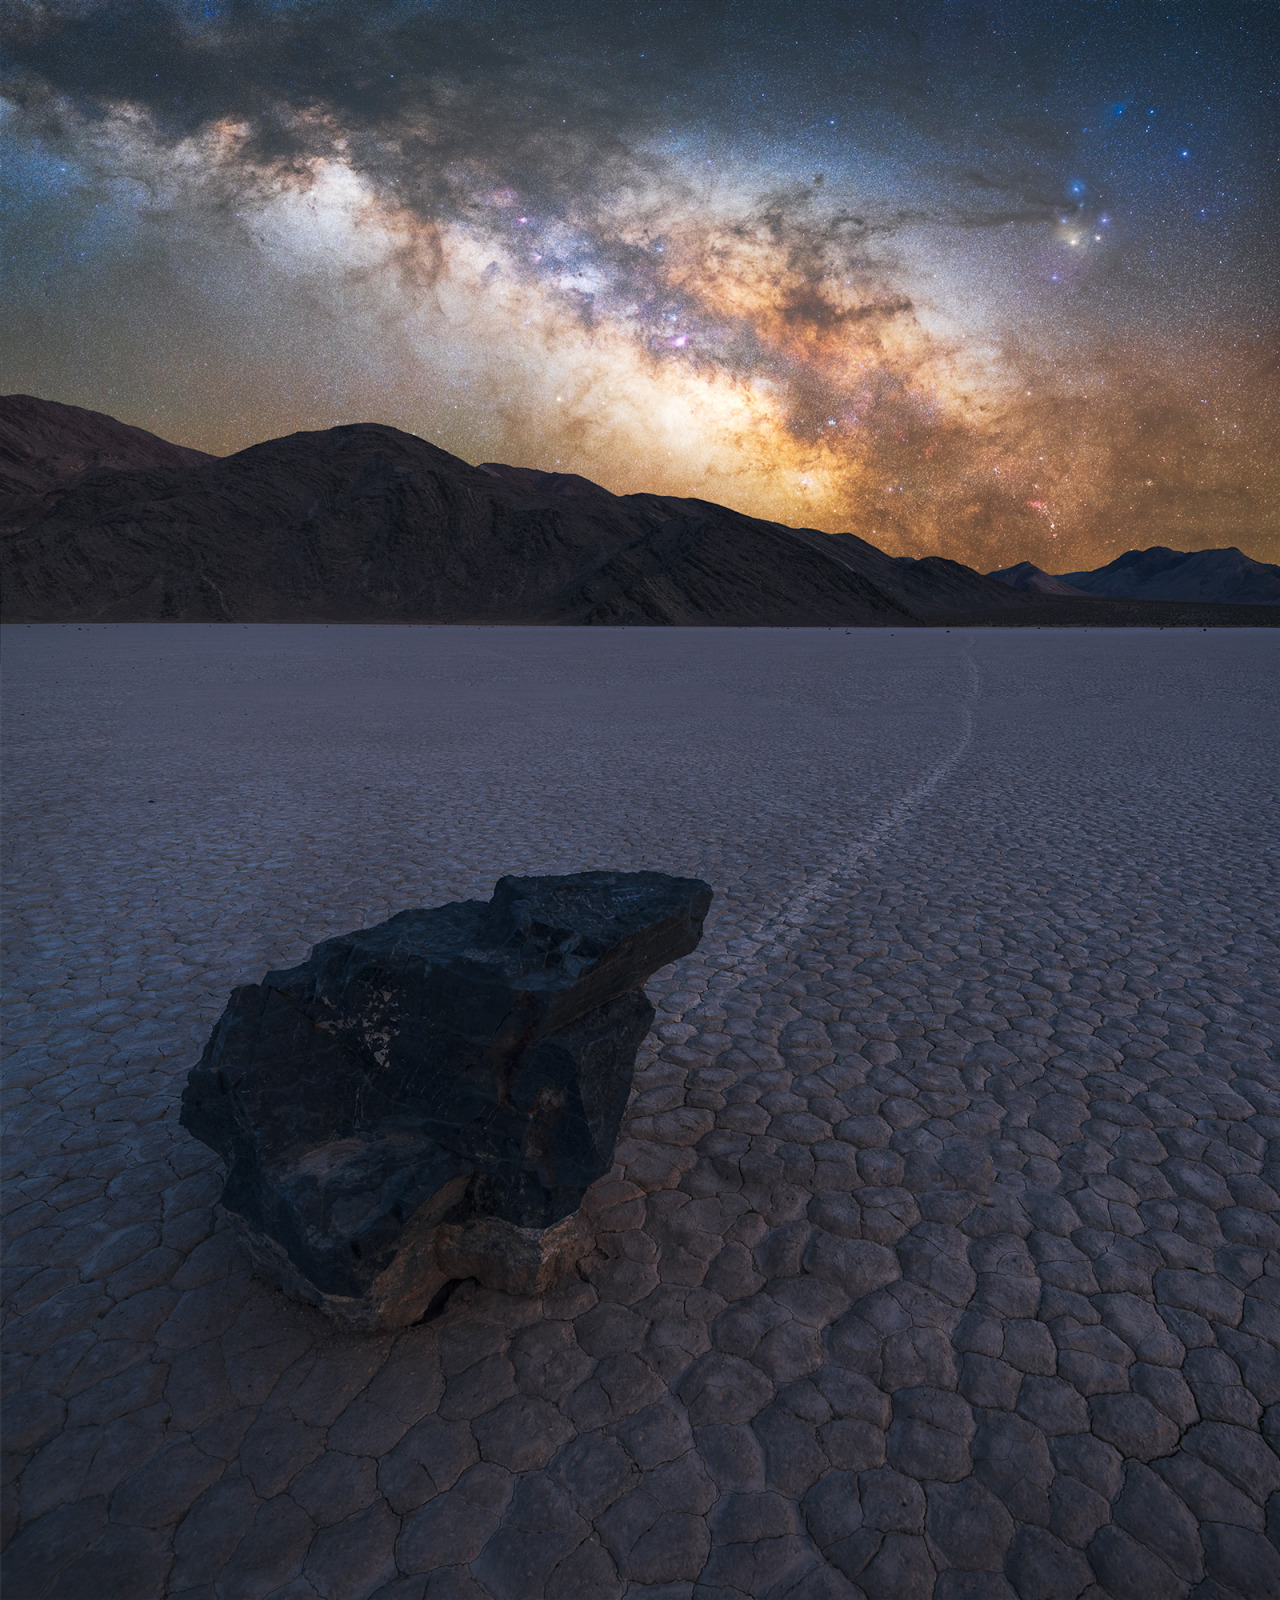 Sailing Stone in Death Valley National Park in California [OC] [1600x2000] - Author: mrcnzajac on reddit #nature#travel#landscape#amazing#beautiful